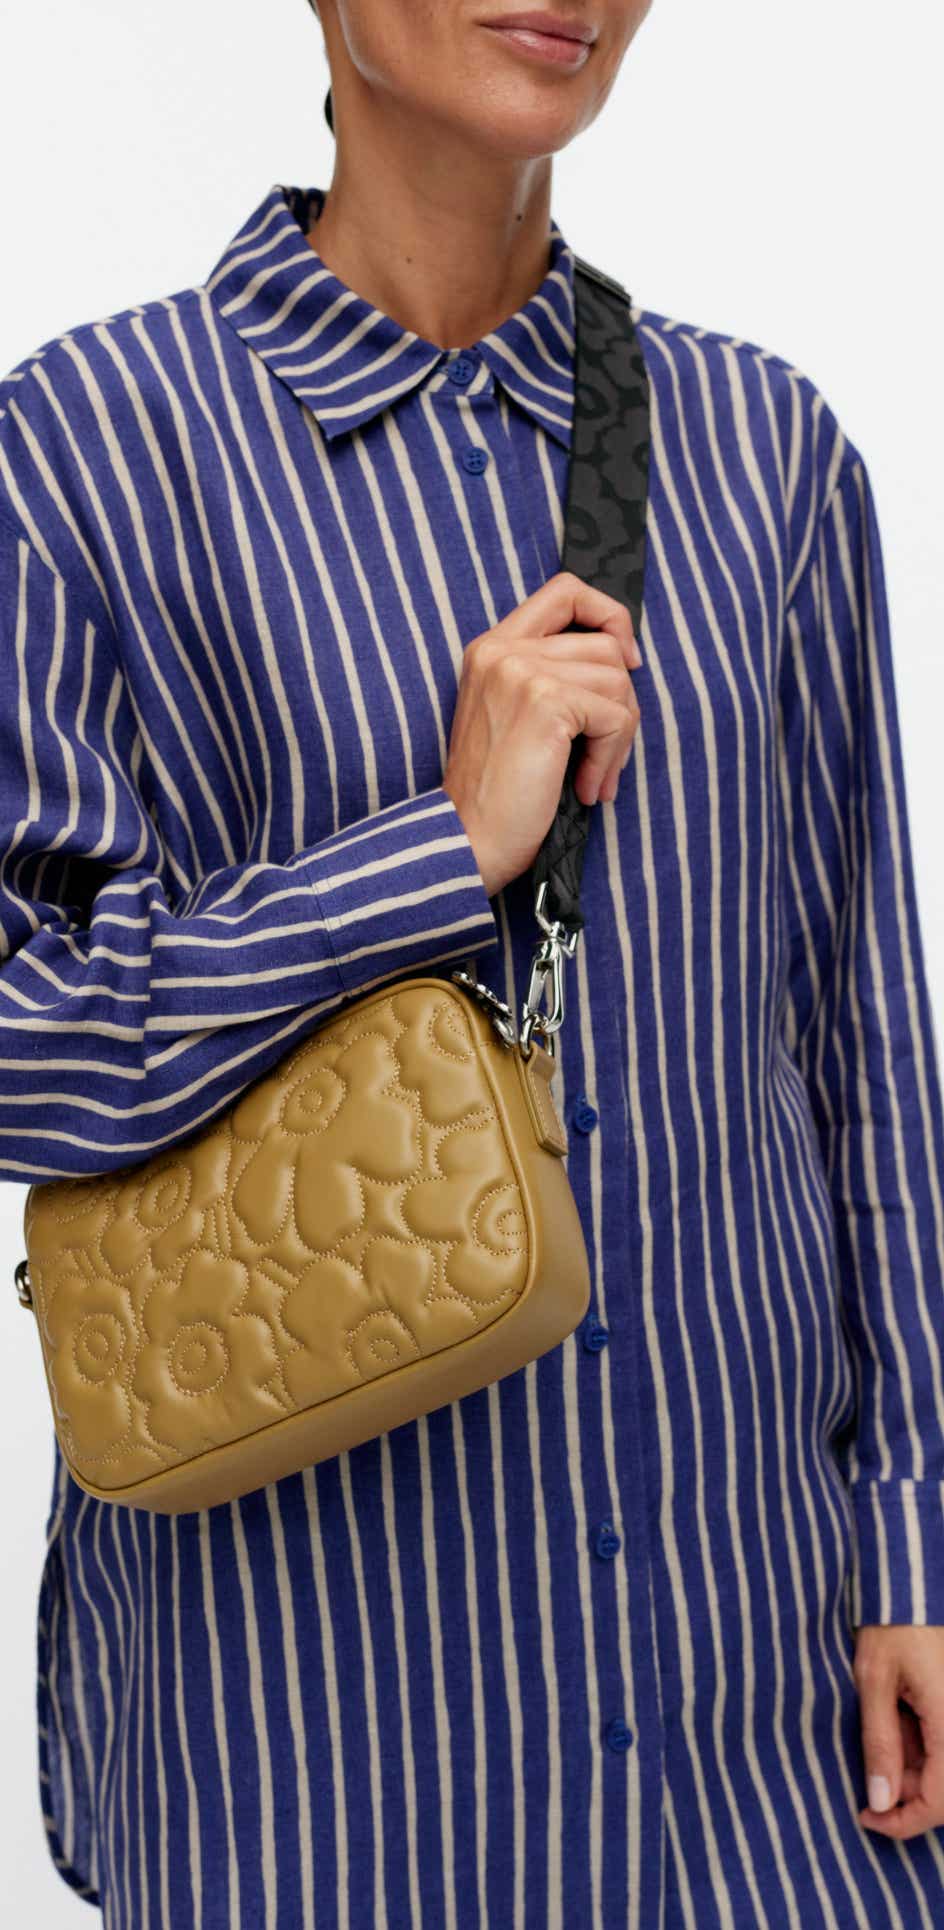 Soft Gratha Unikko shoulder bag – 15 x 22 x 5 cm – padded leather with topstitched Unikko pattern